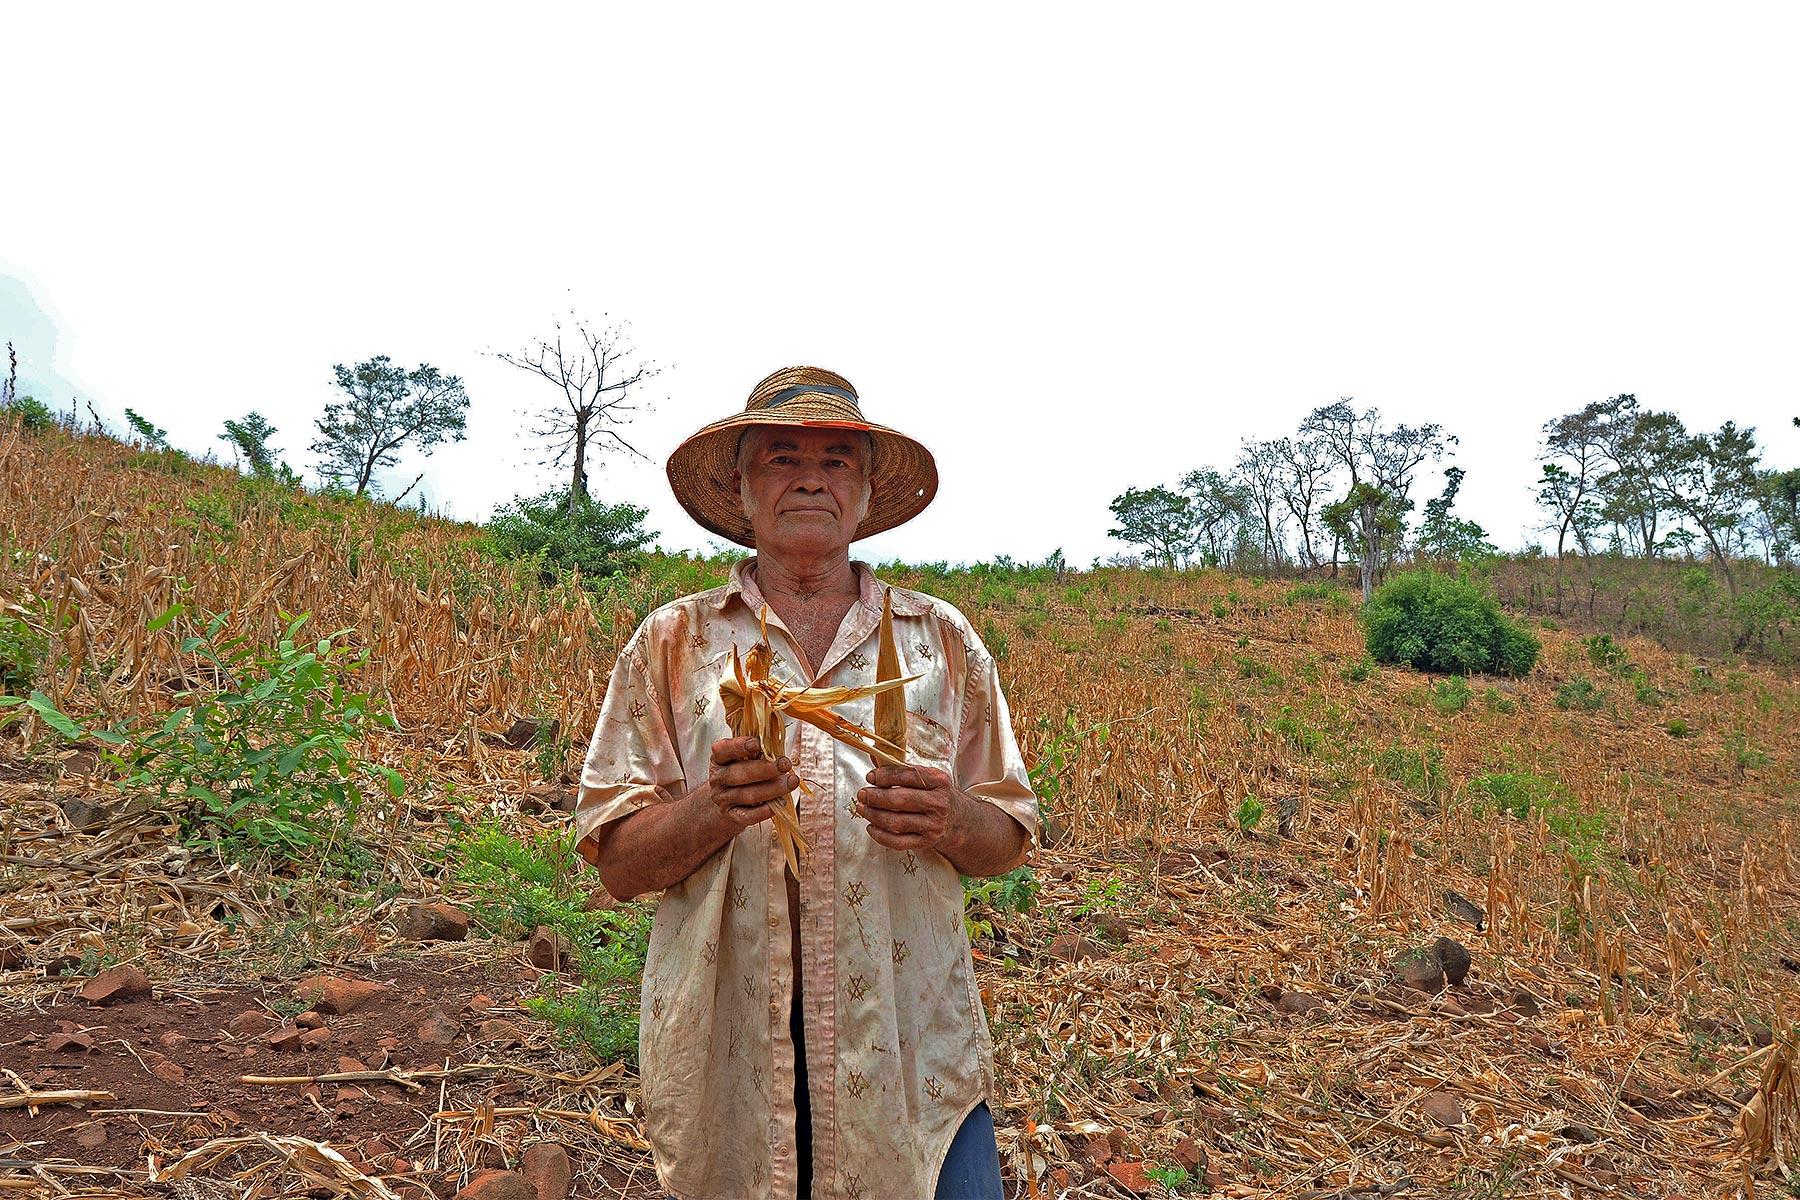 A farmer in El Salvador,Â showing the impact ofÂ prolonged droughtÂ on his crop of corn. LWF/C. KÃ¤stnerÂ 